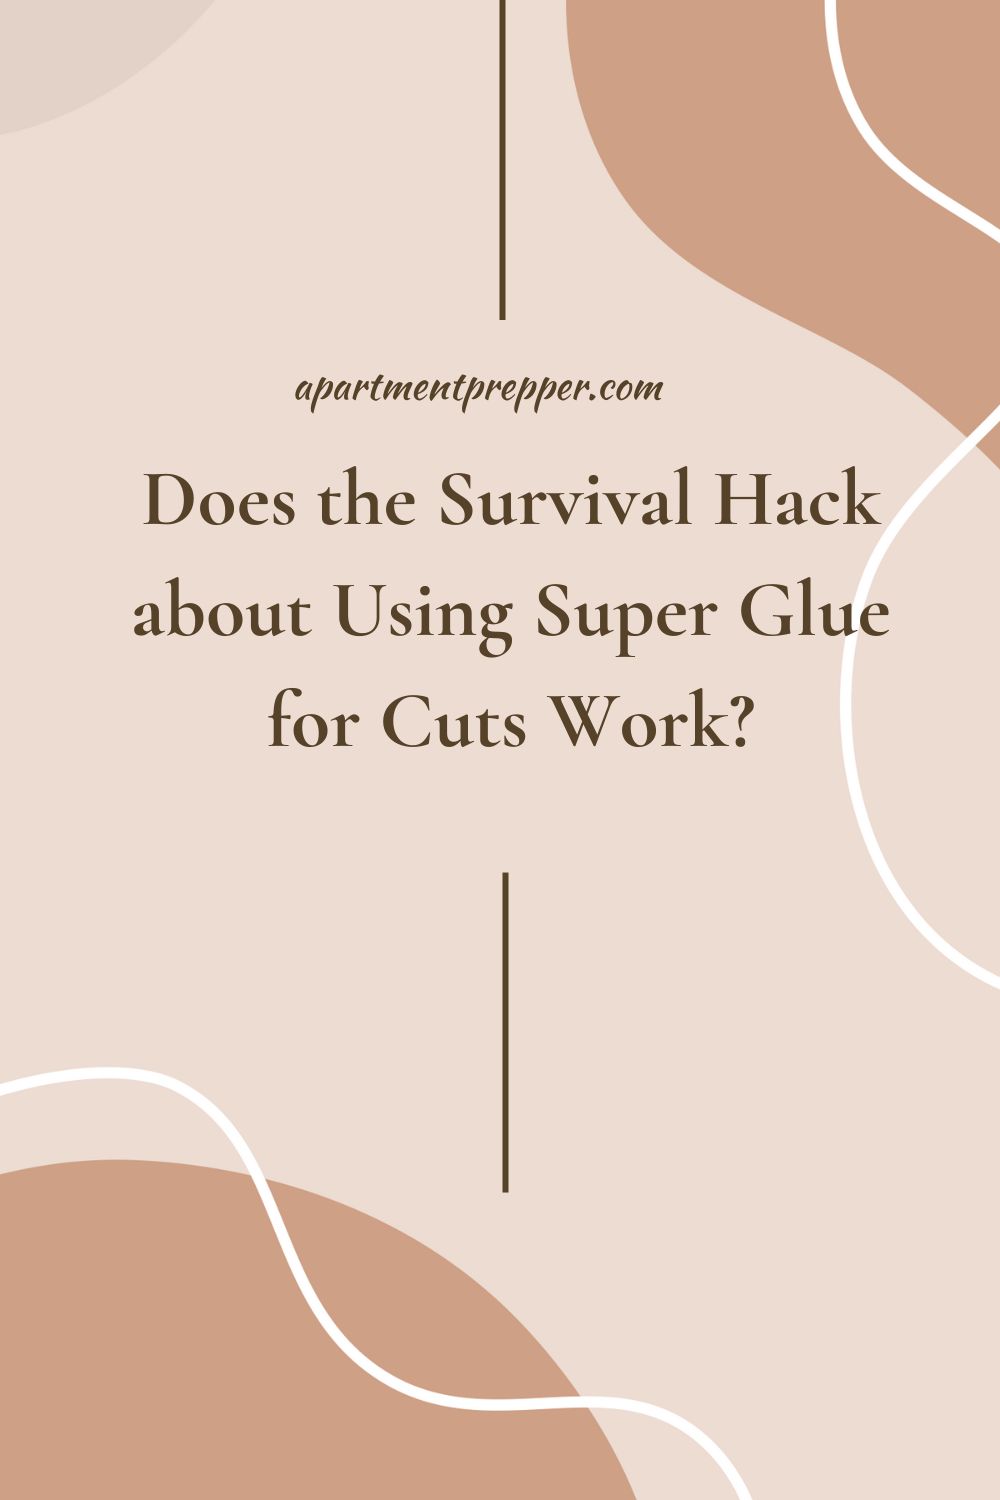 Amazing Uses of Super Glue for Emergencies - Prepper Blog